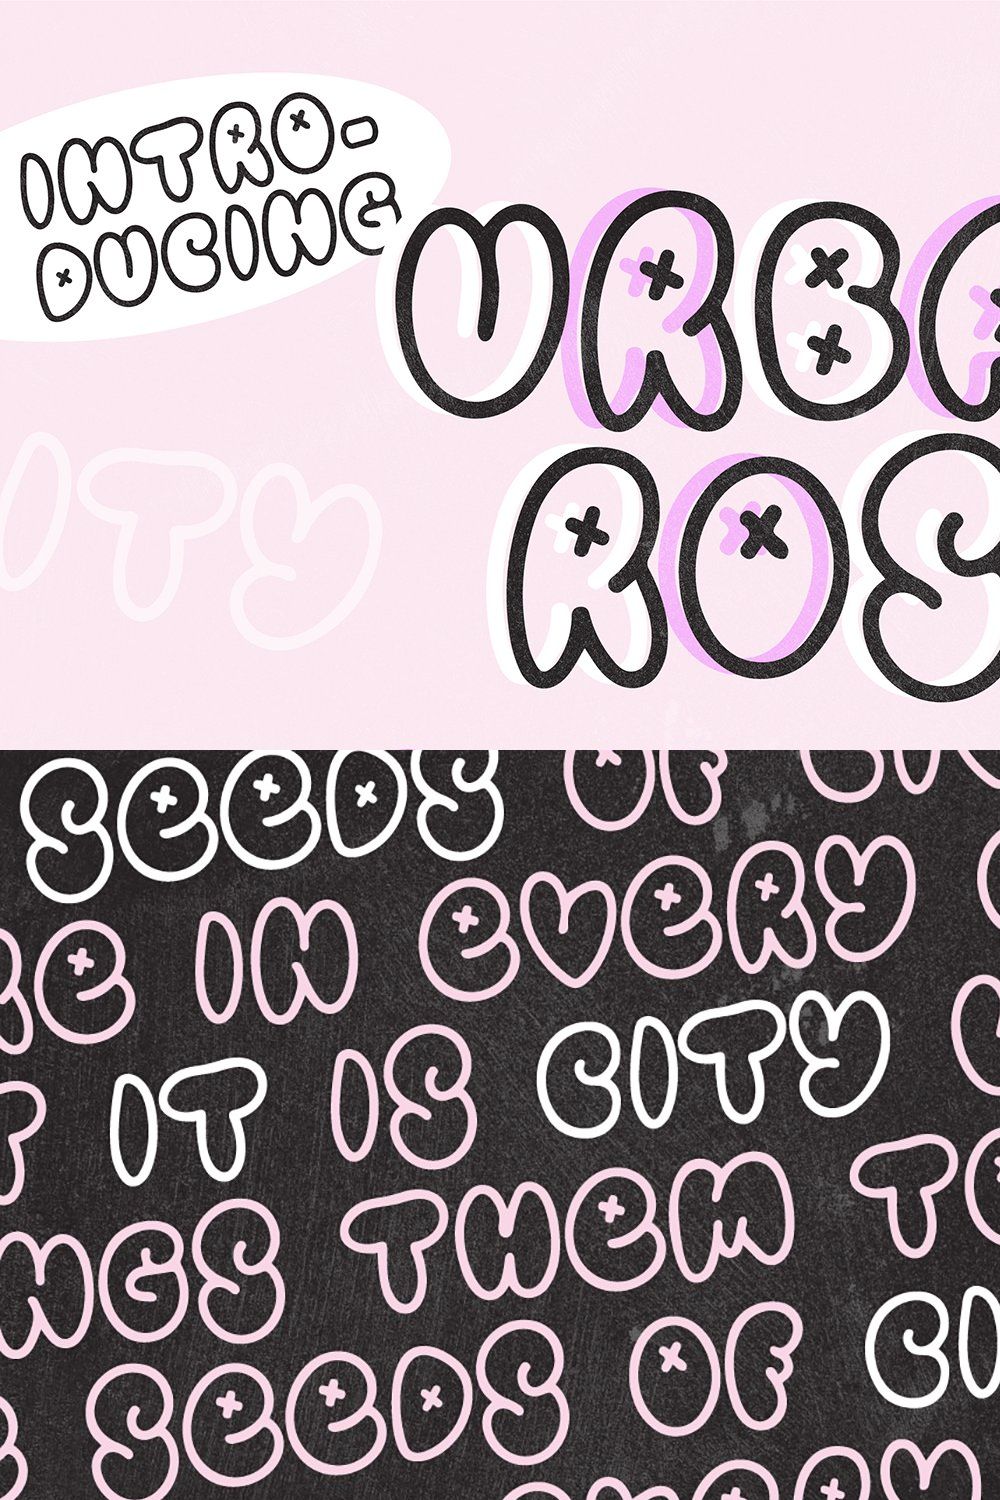 URBAN ROSE Cute Bubble Graffiti Font pinterest preview image.